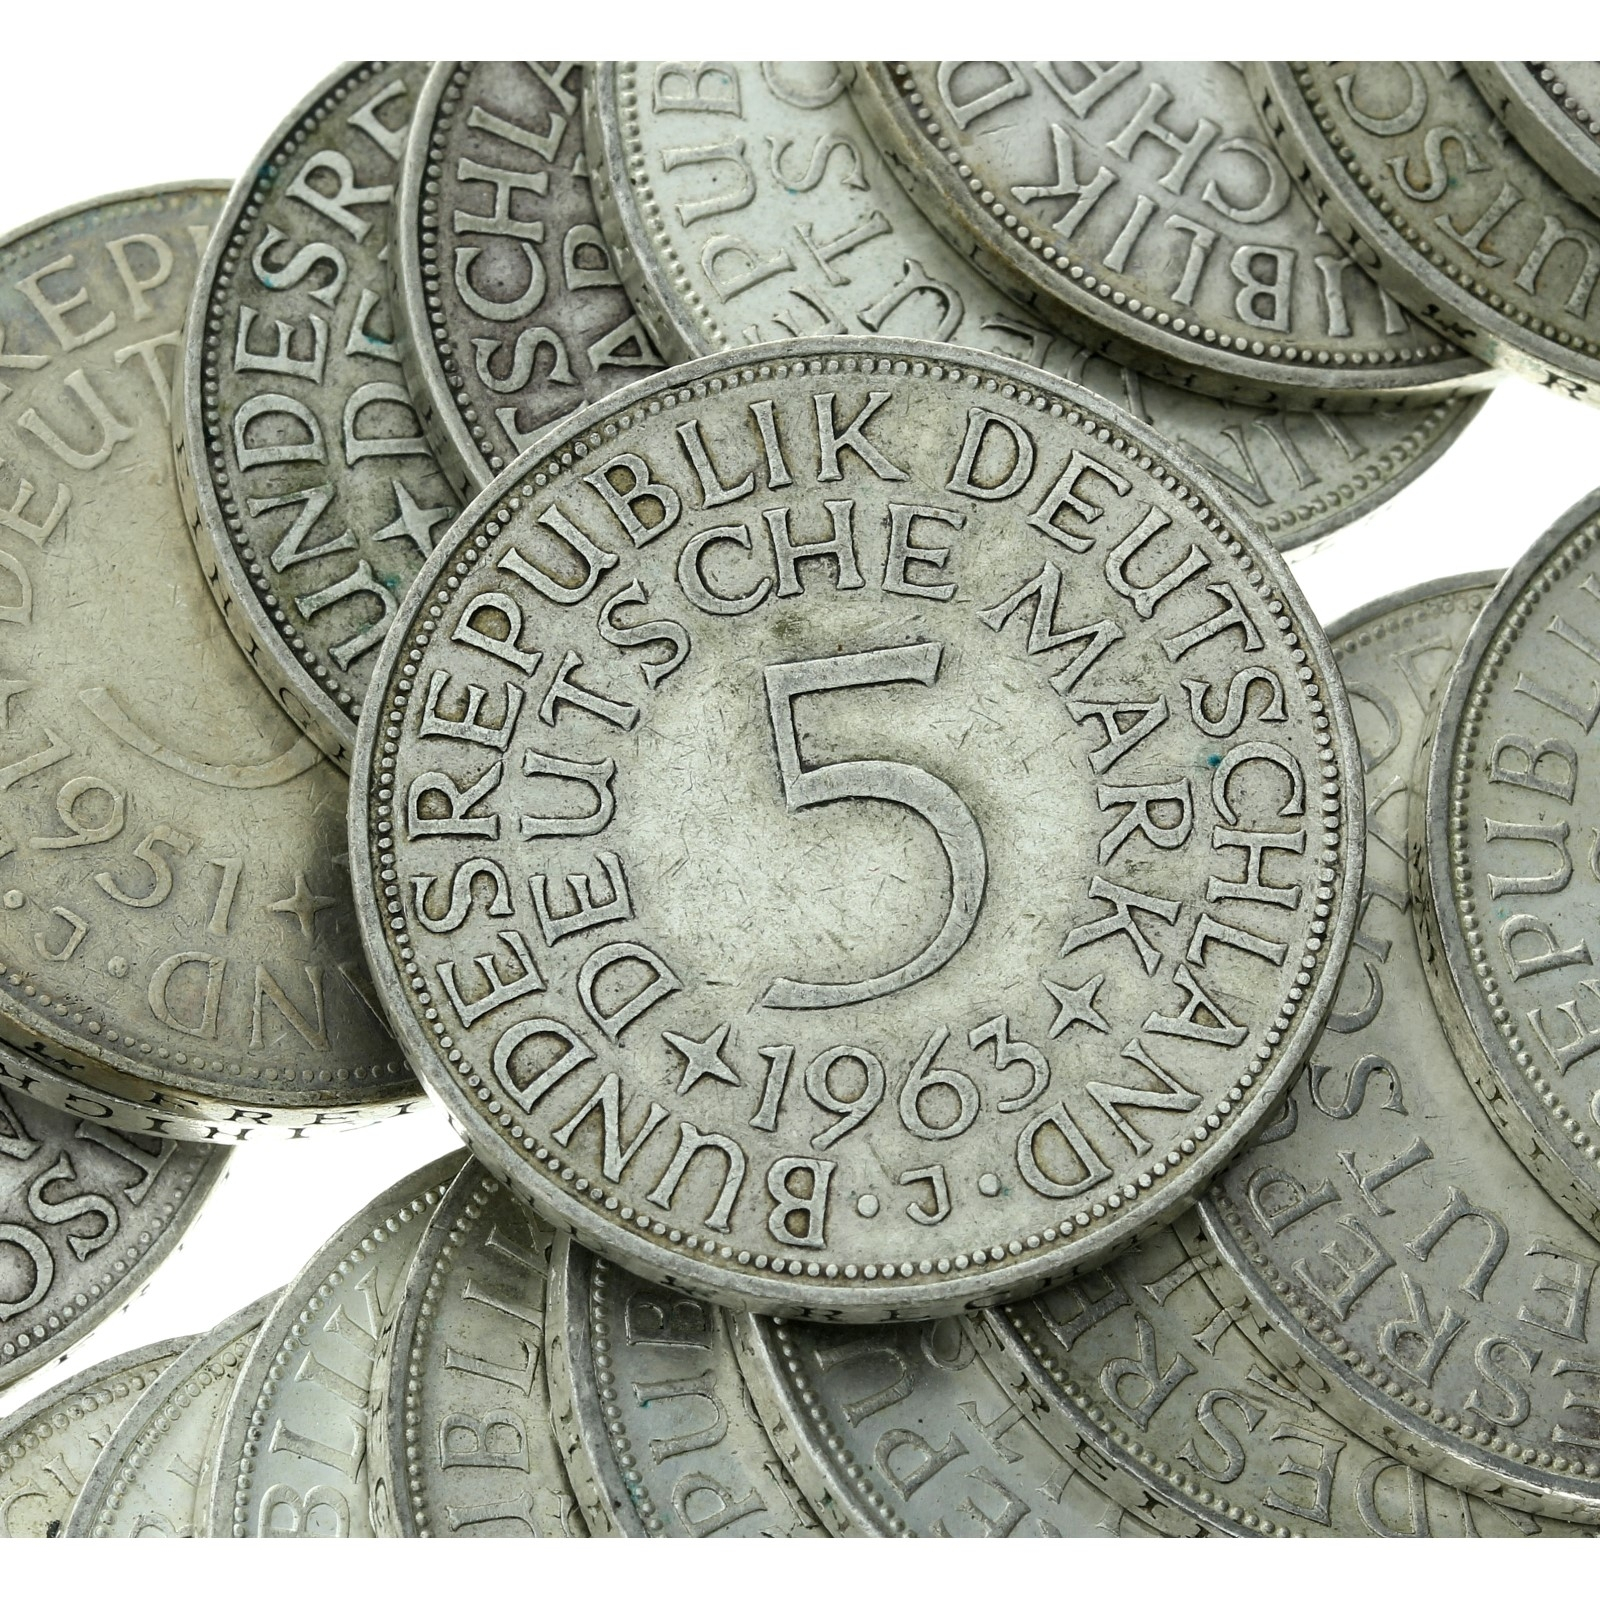 Germany - 5 DM - silver coins - pcs 350 gram silver